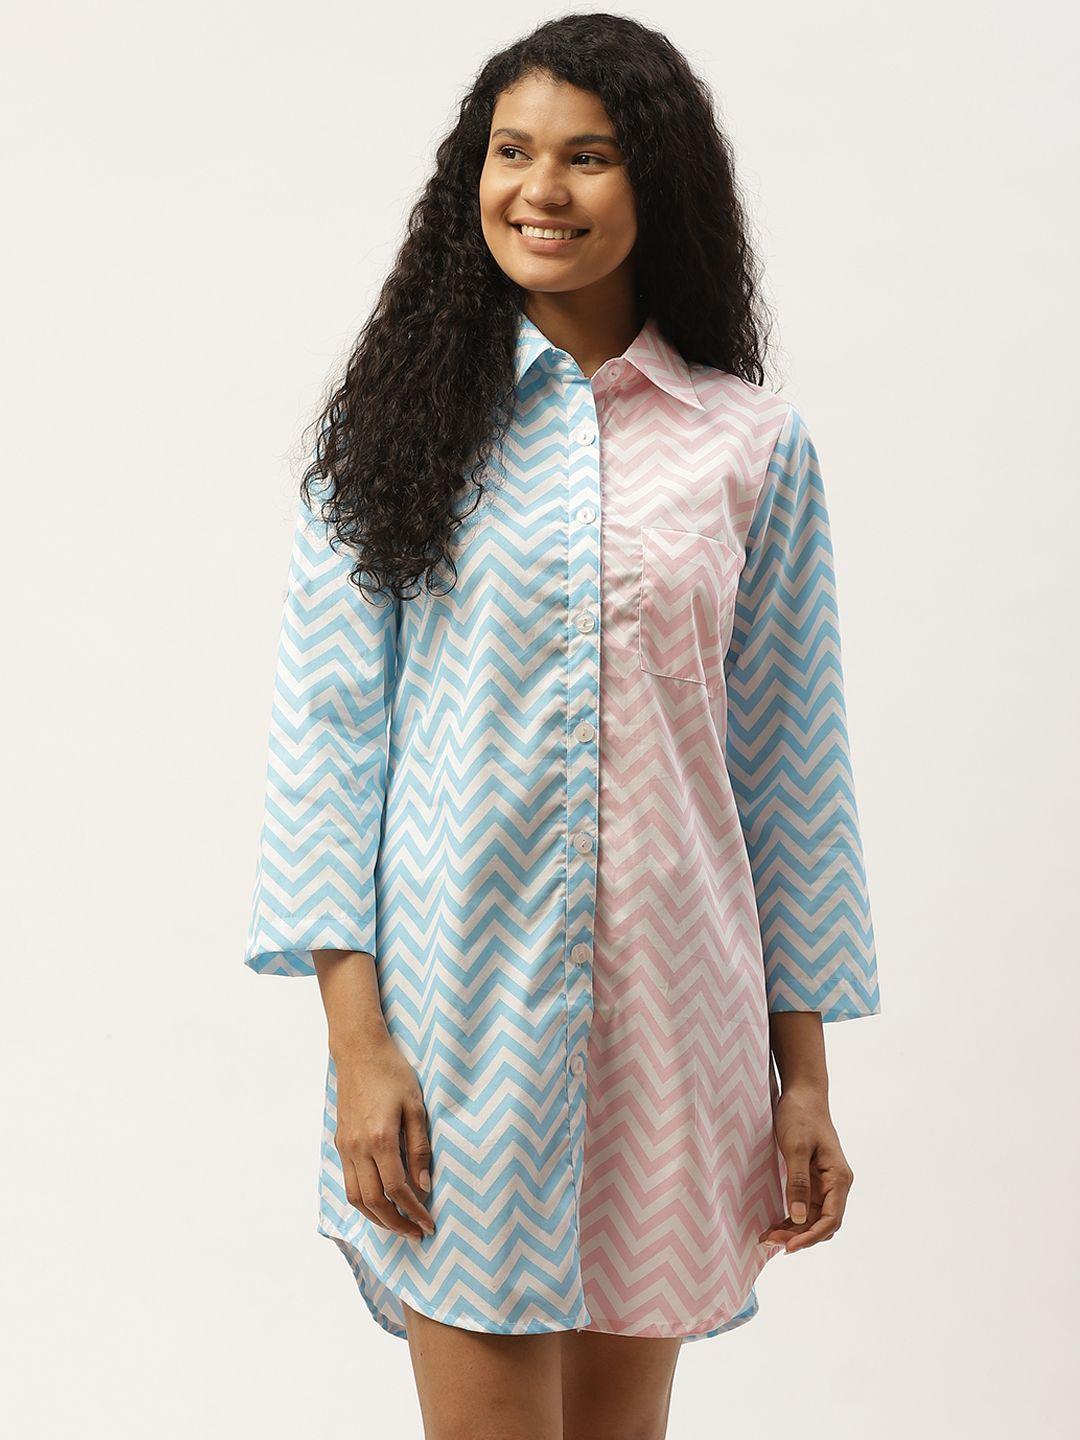 cotclo women blue & pink chevron print cotton sleep shirt